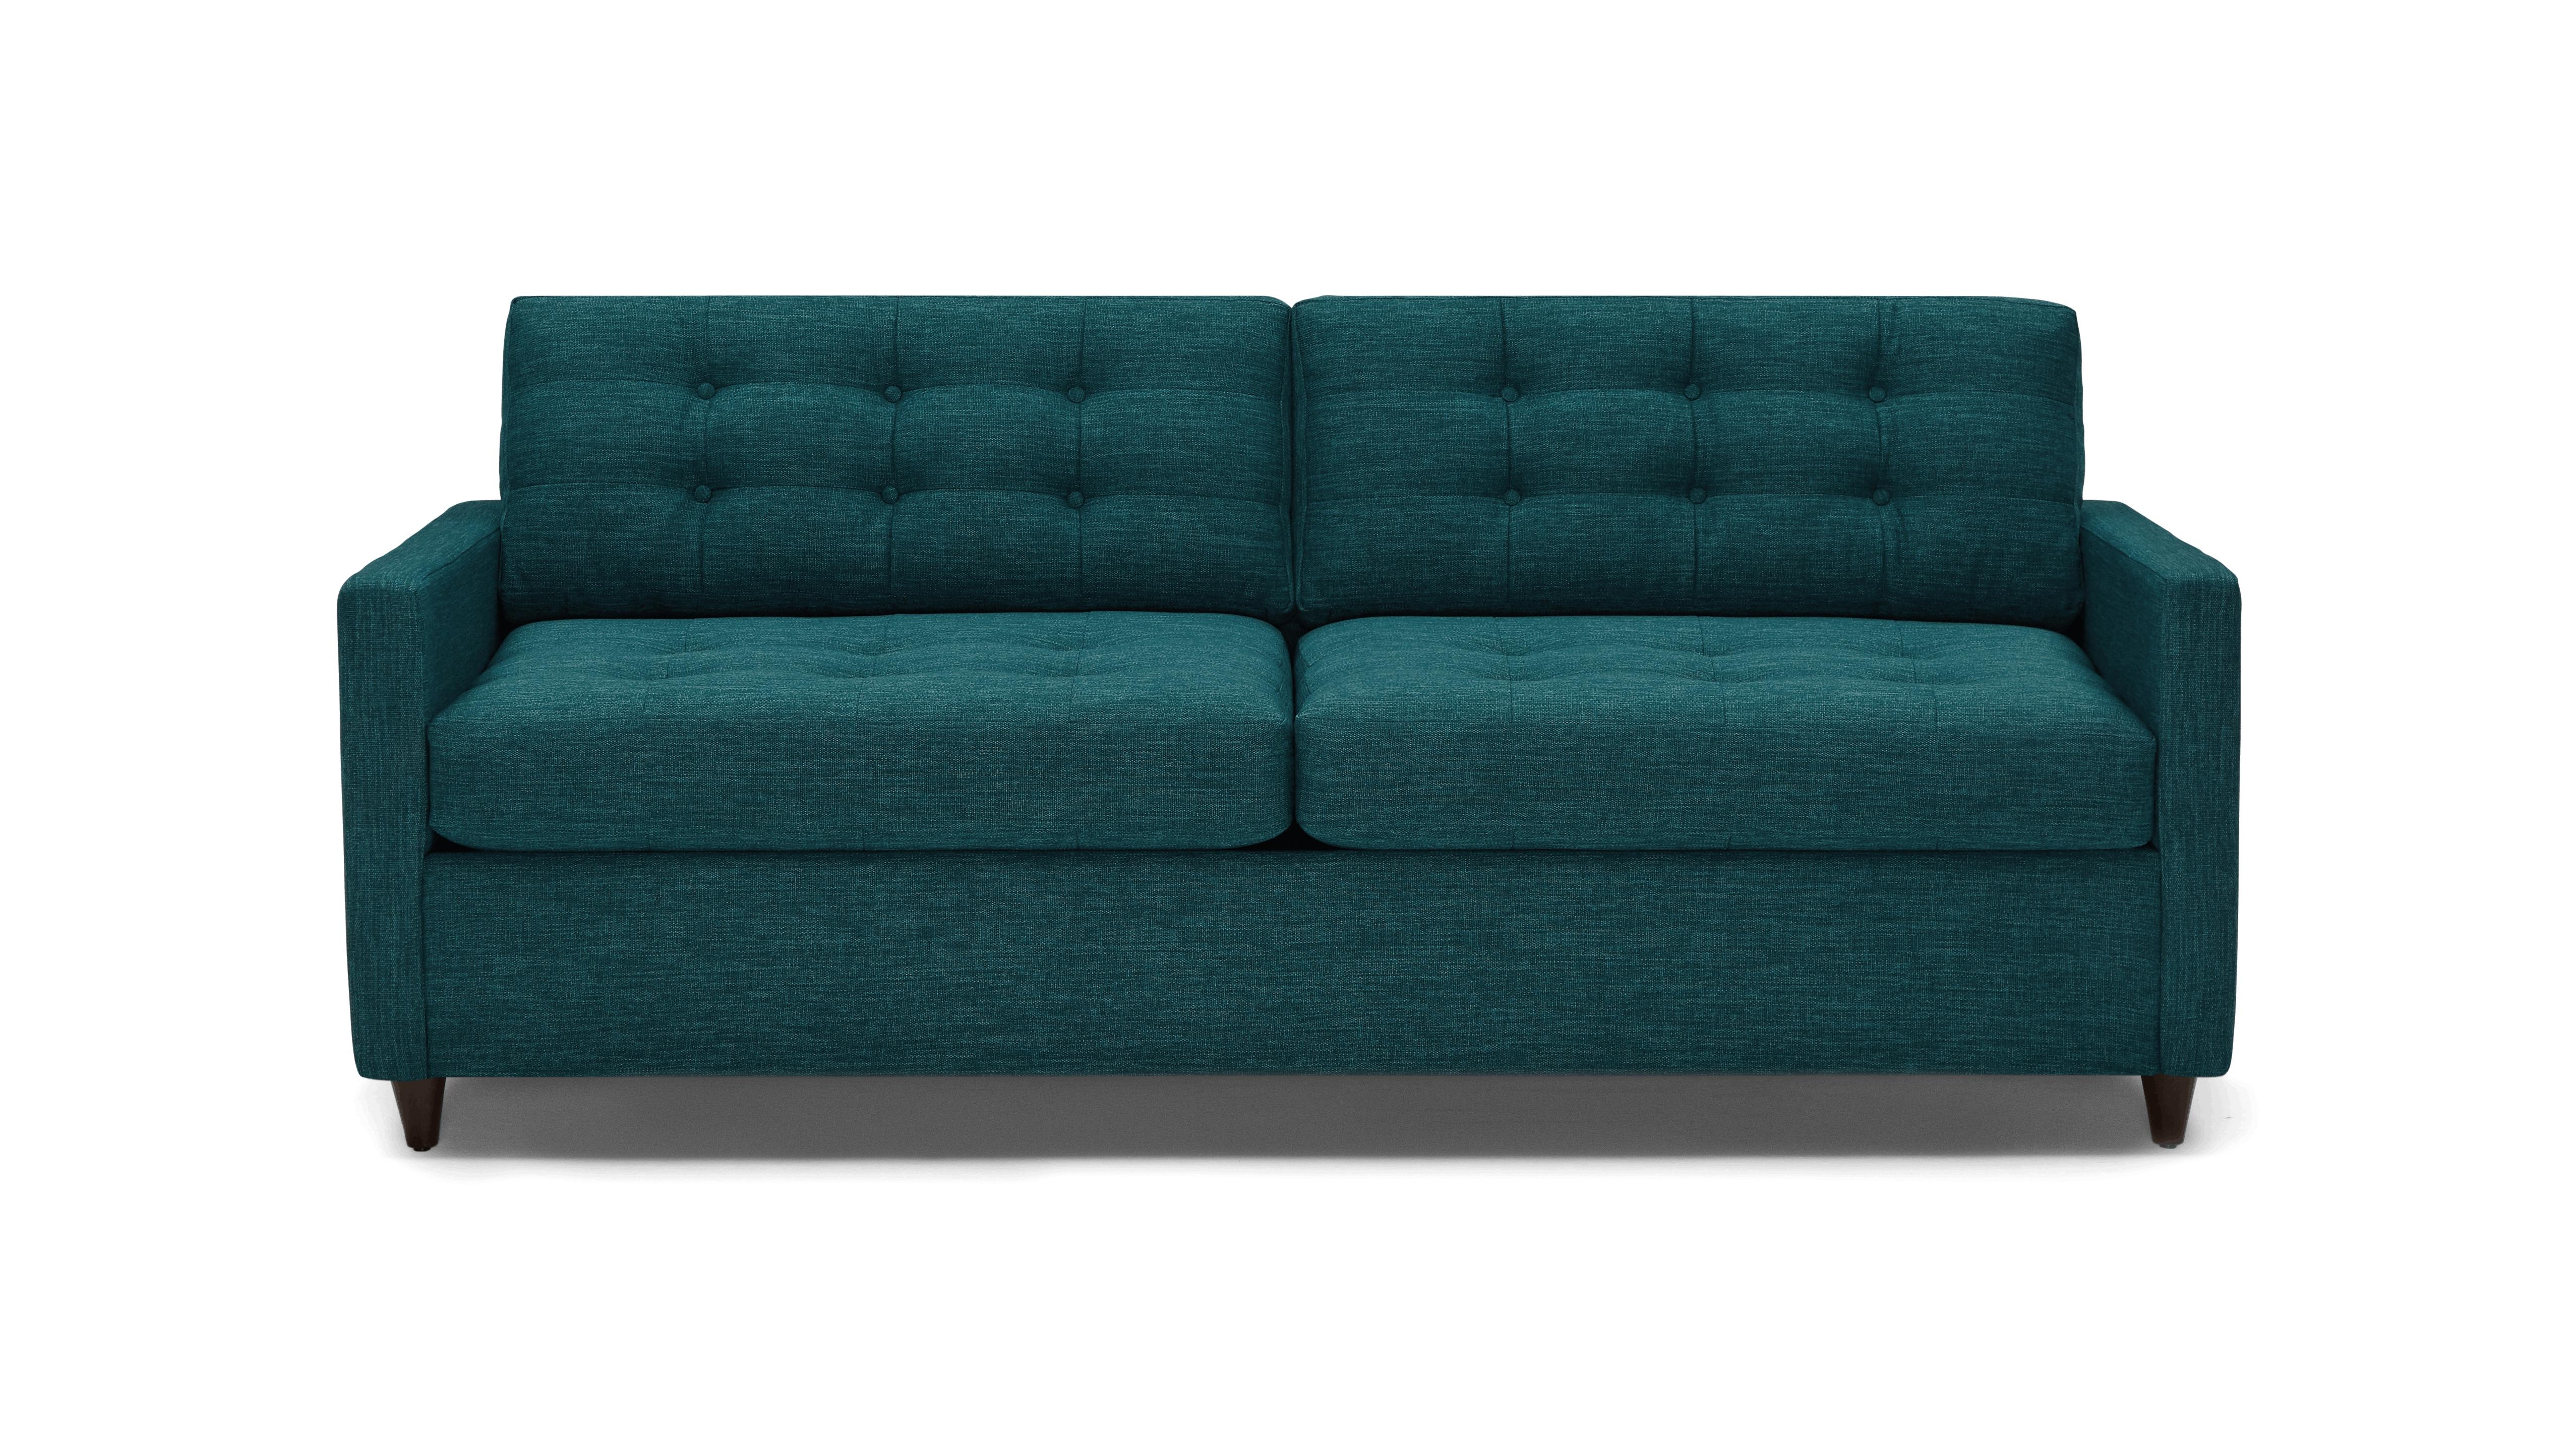 Blue Eliot Mid Century Modern Sleeper Sofa - Key Largo Zenith Teal - Mocha - Foam - Image 0